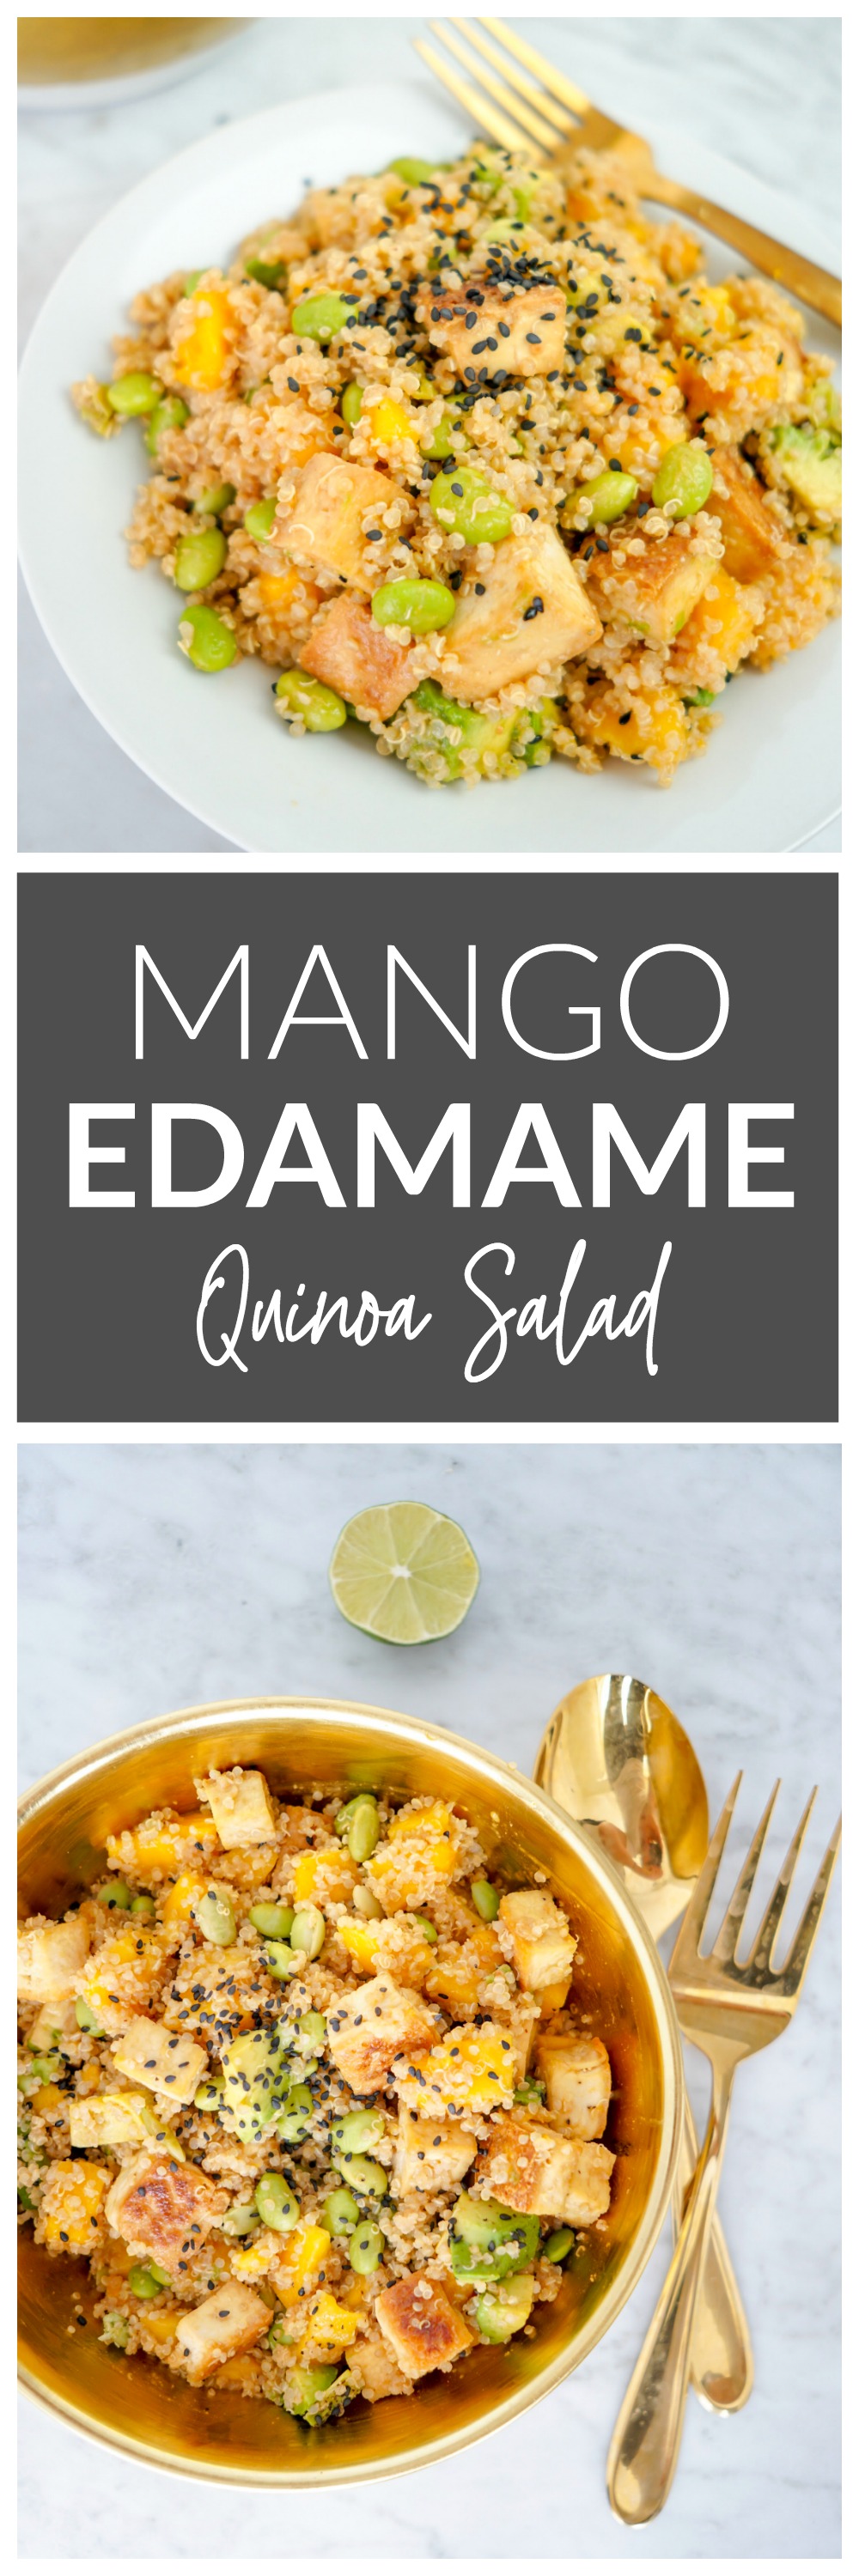 Mango Edamame Quinoa Salad - a tasty, healthy summer salad!